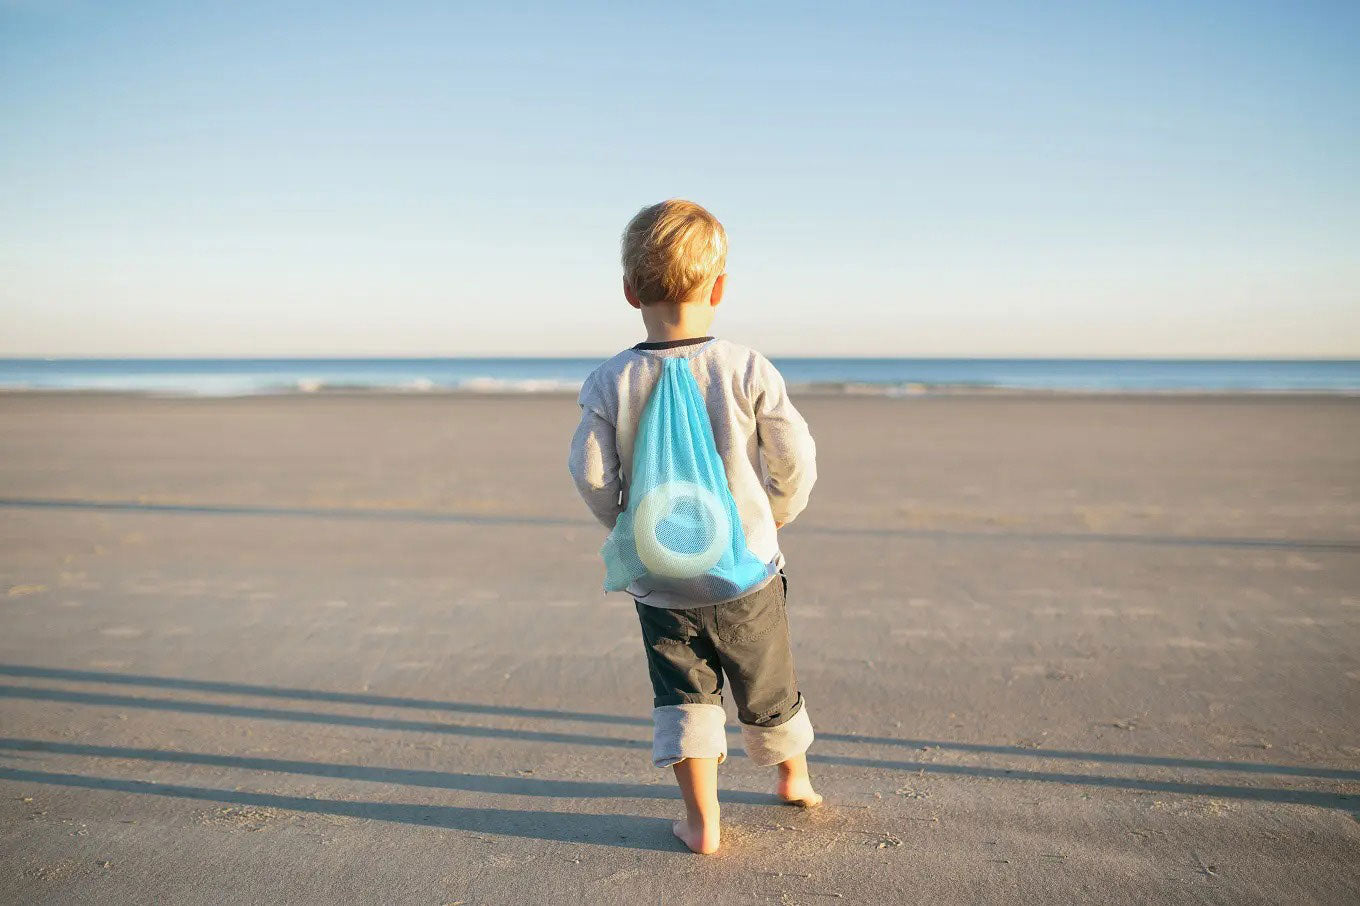 Beach Set Mesh Backpack Mini Ballo, Cuppi, Magic Heart Shaper - Quut